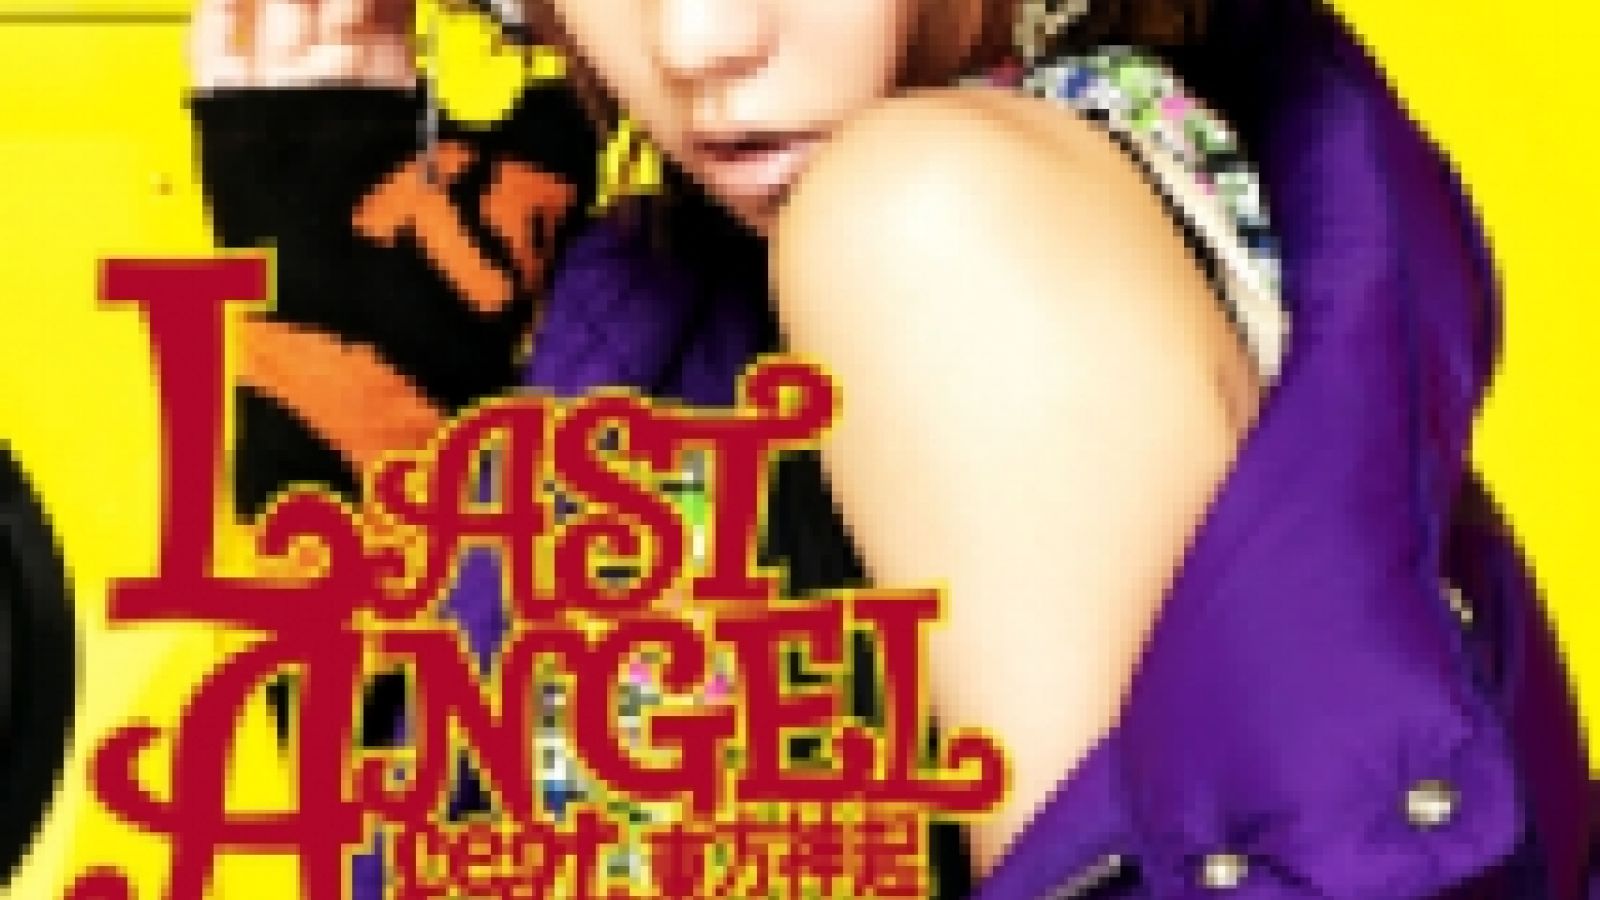 Koda Kumi - LAST ANGEL feat. Tohoshinki © Ayumi Hamasaki. All rights reserved.